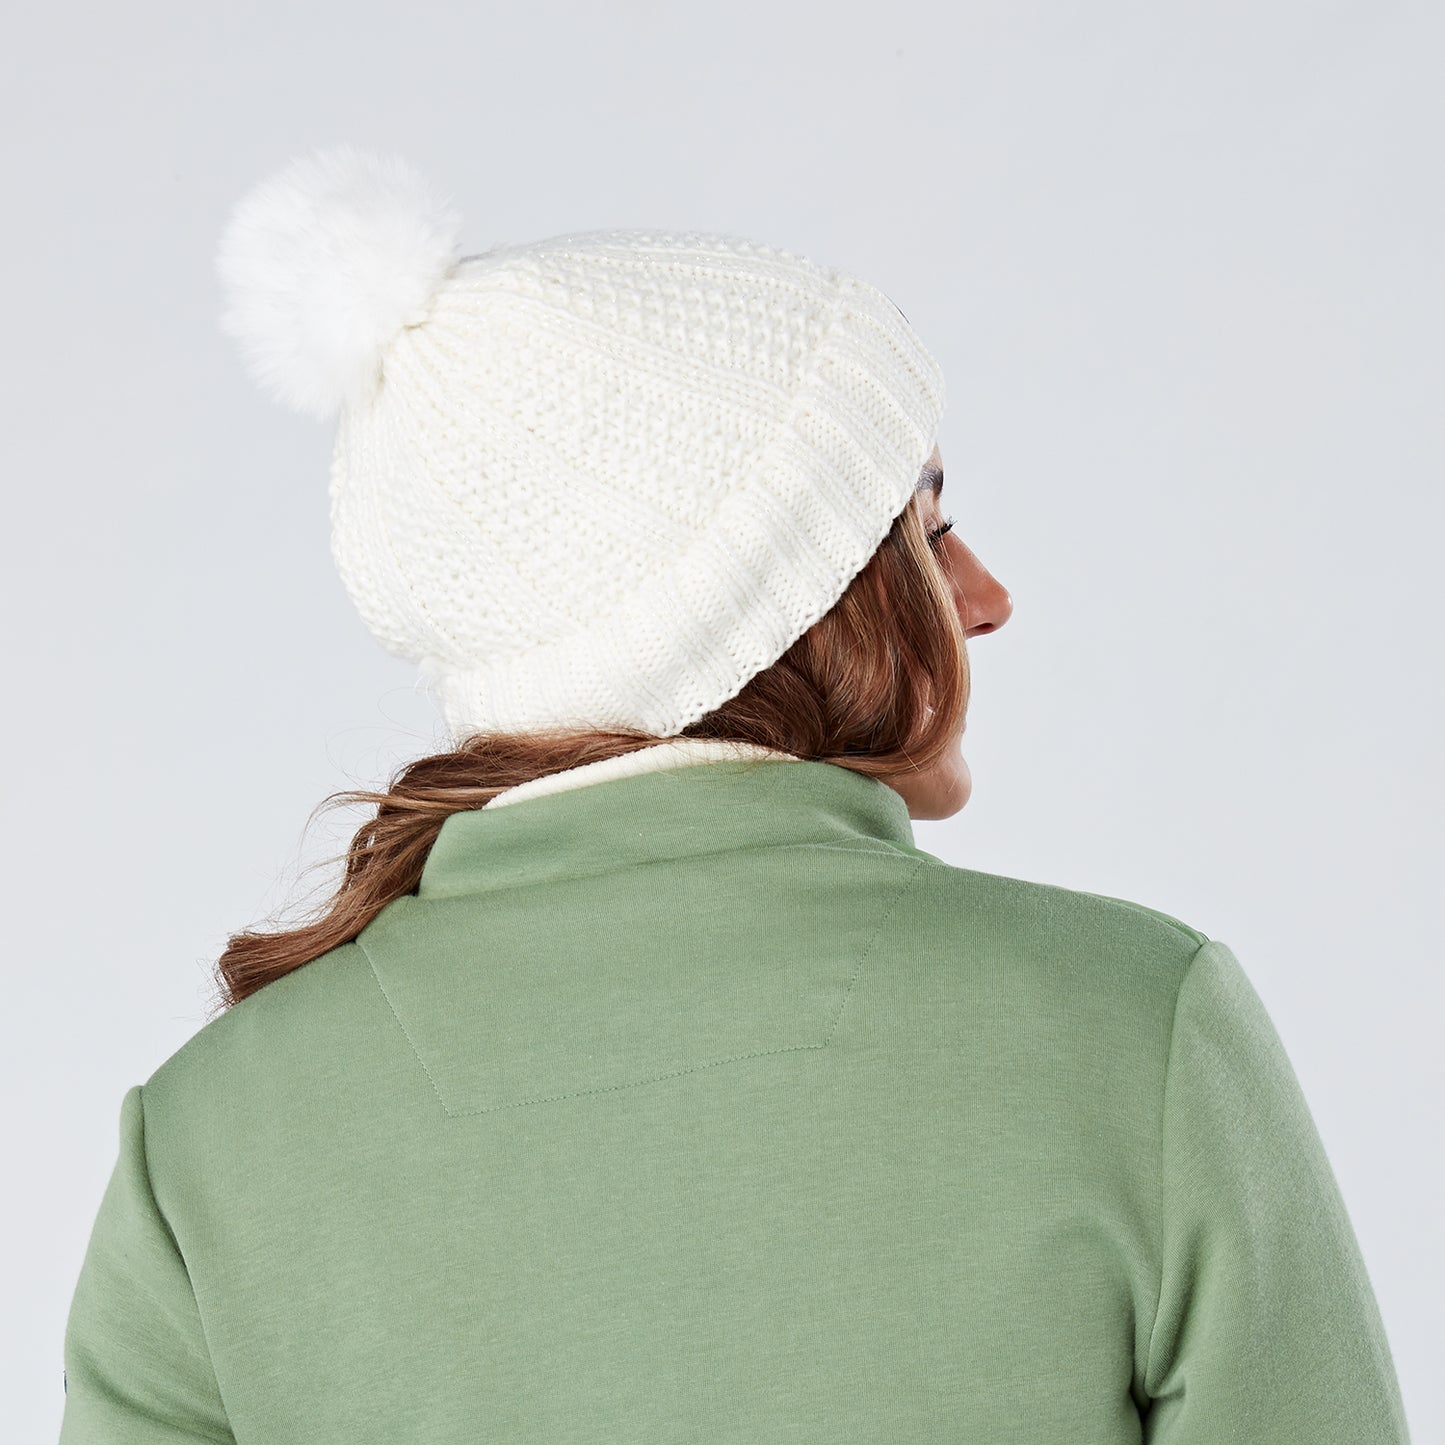 Swing Out Sister Fleece Lined Bobble Hat in Winter White